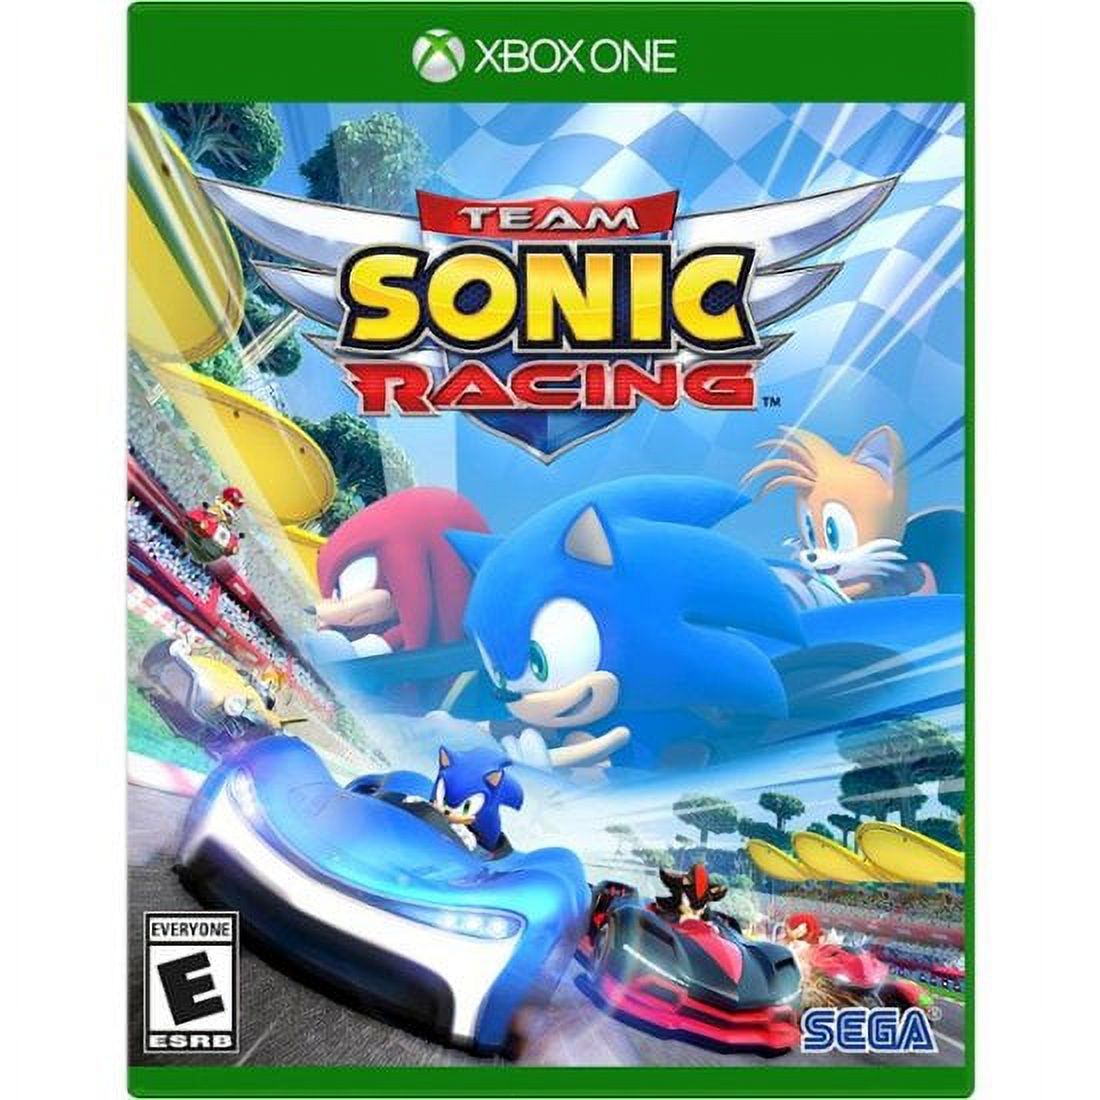 Team Sonic Racing, Sega, Xbox One, [Physical], SR-64089-2 - image 1 of 10